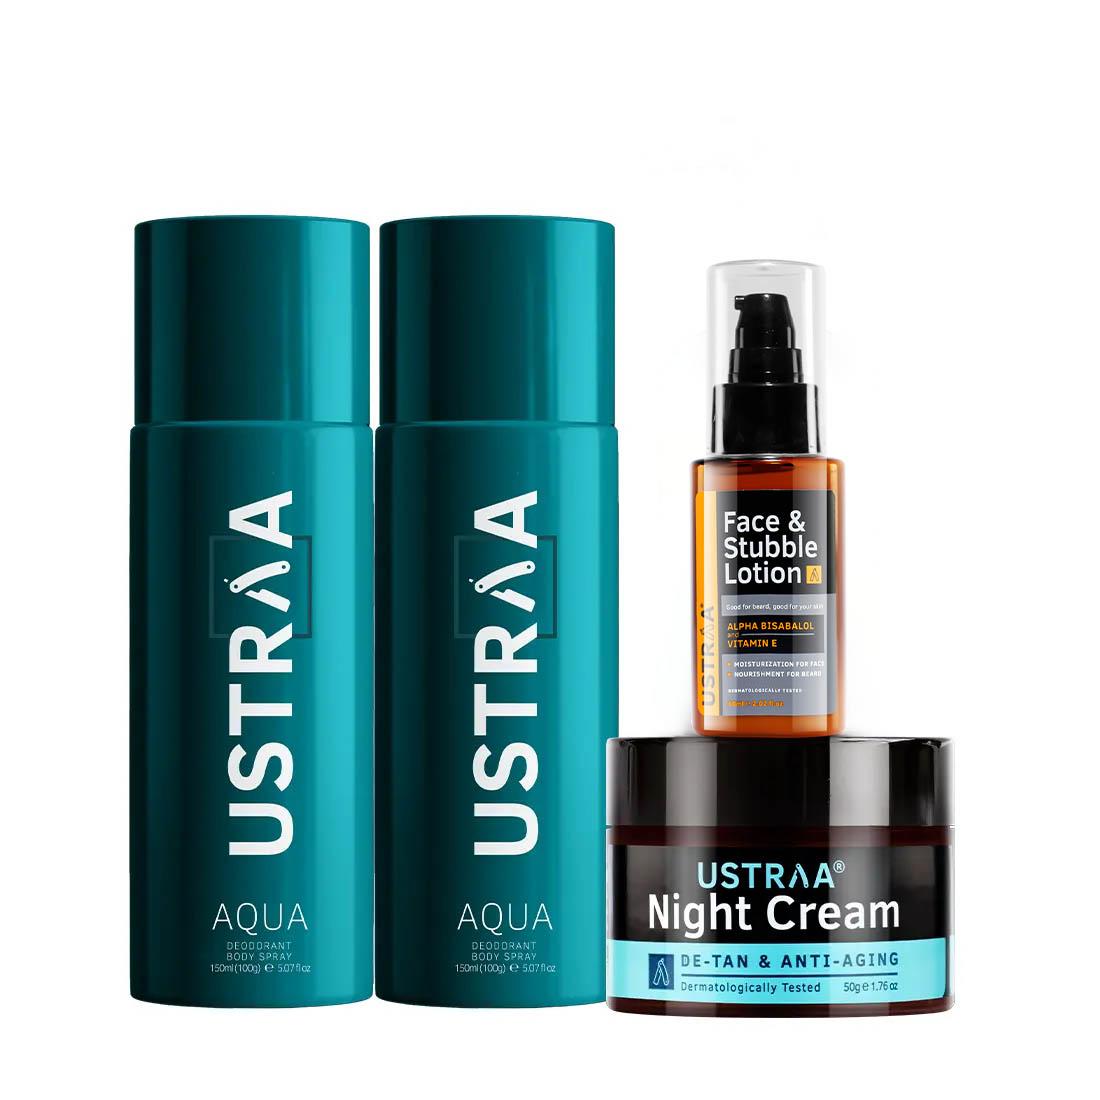 Ustraa Aqua Deodorant & Face & Stubble Lotion & Night Cream